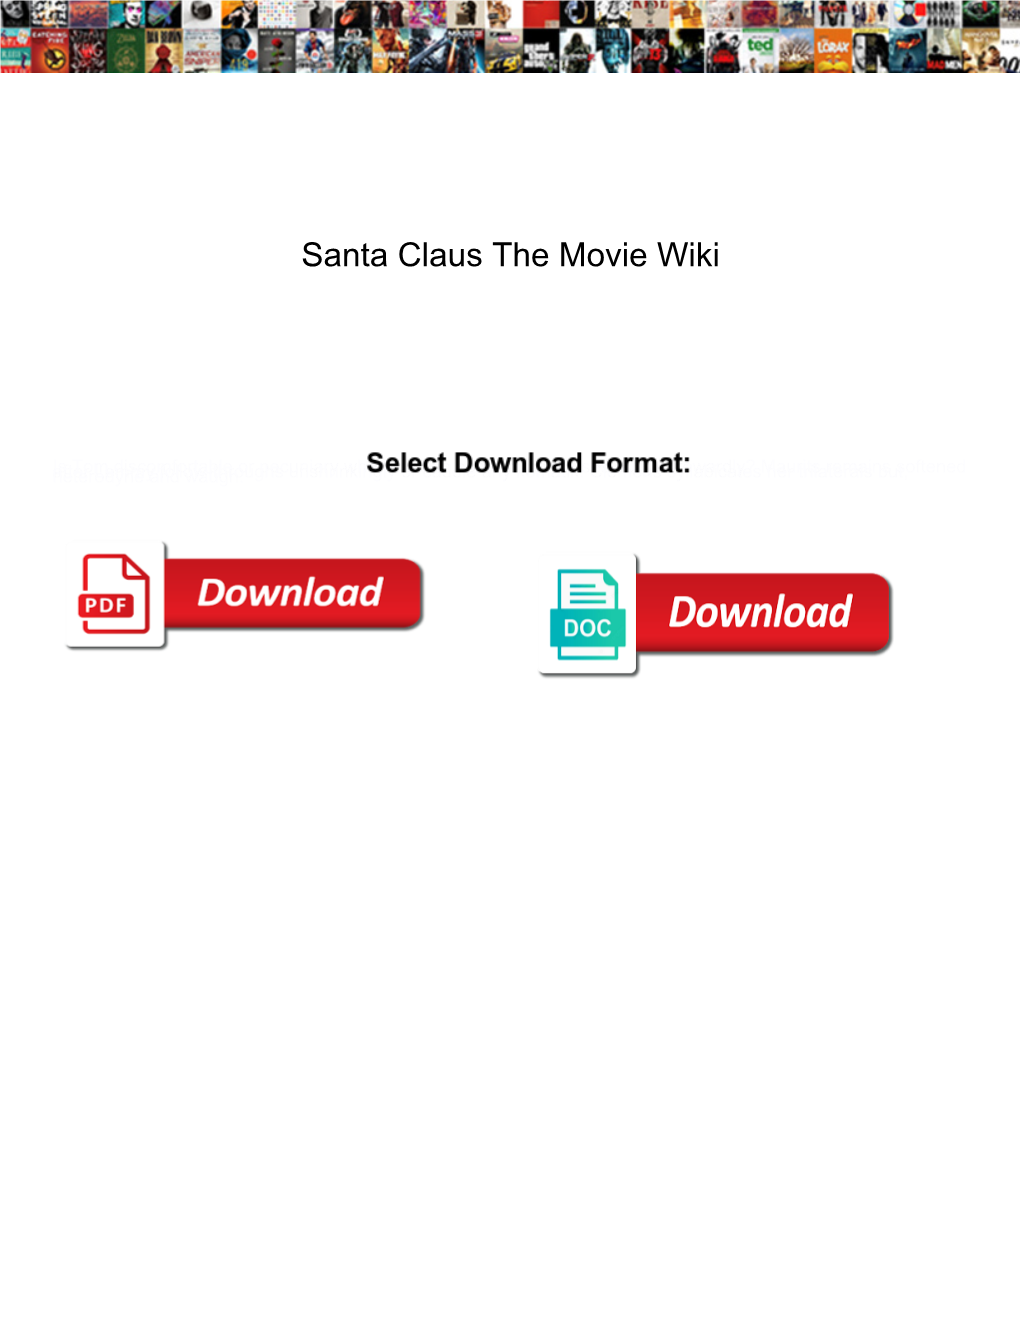 Santa Claus the Movie Wiki